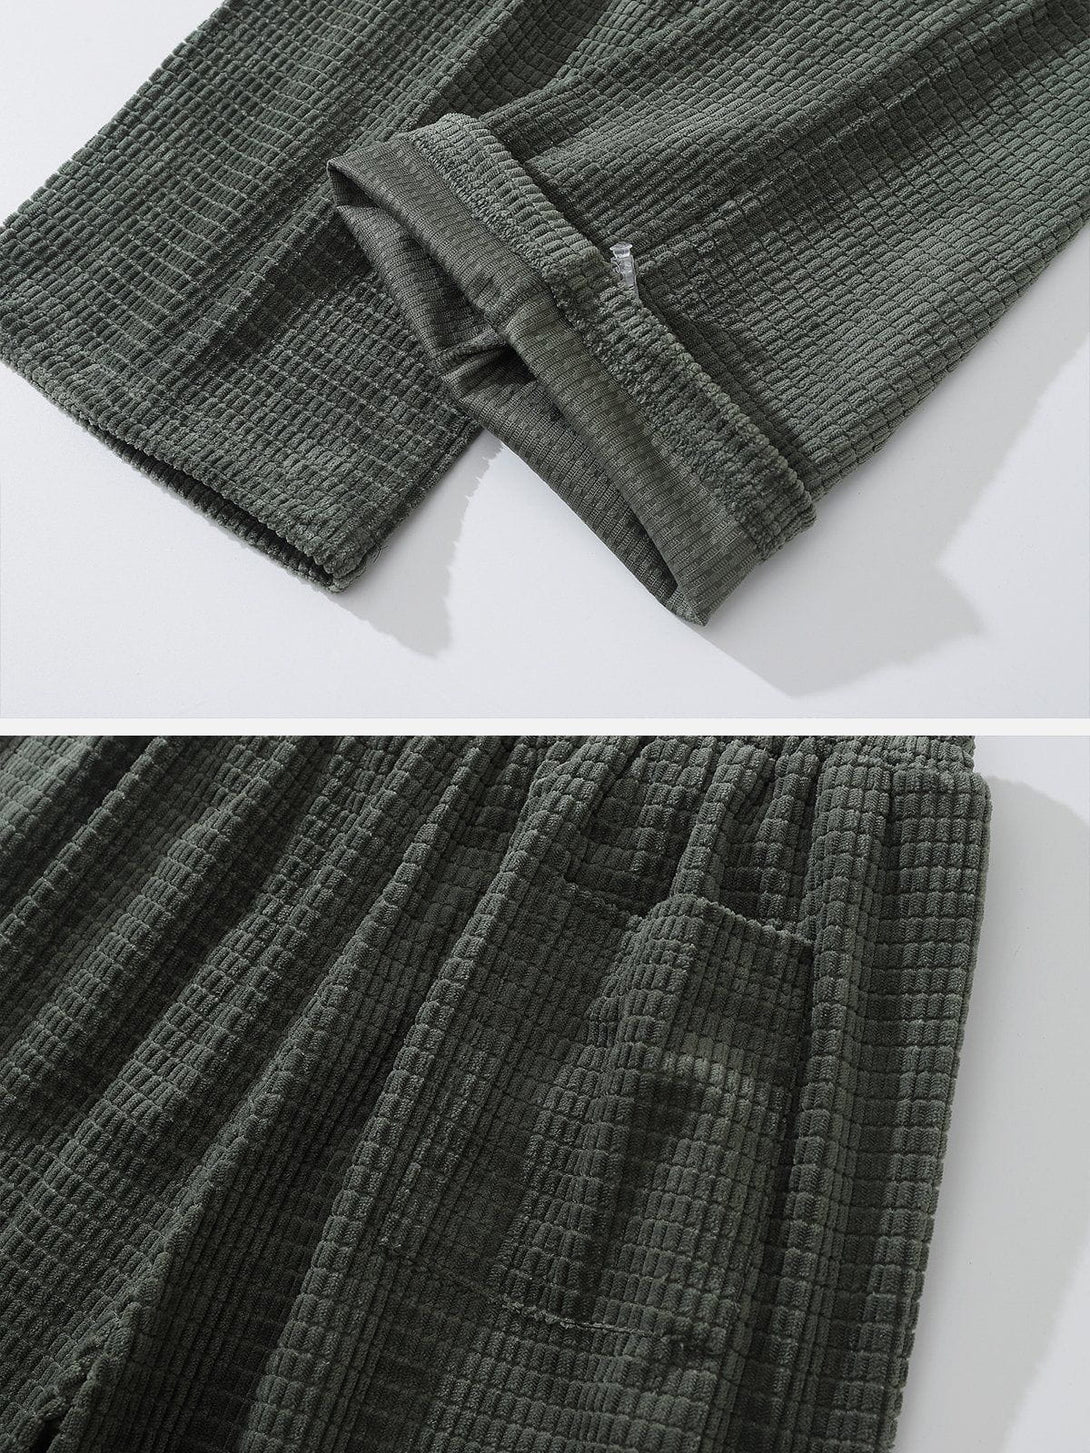 Levefly - Solid Corduroy Waffle Pants - Streetwear Fashion - levefly.com